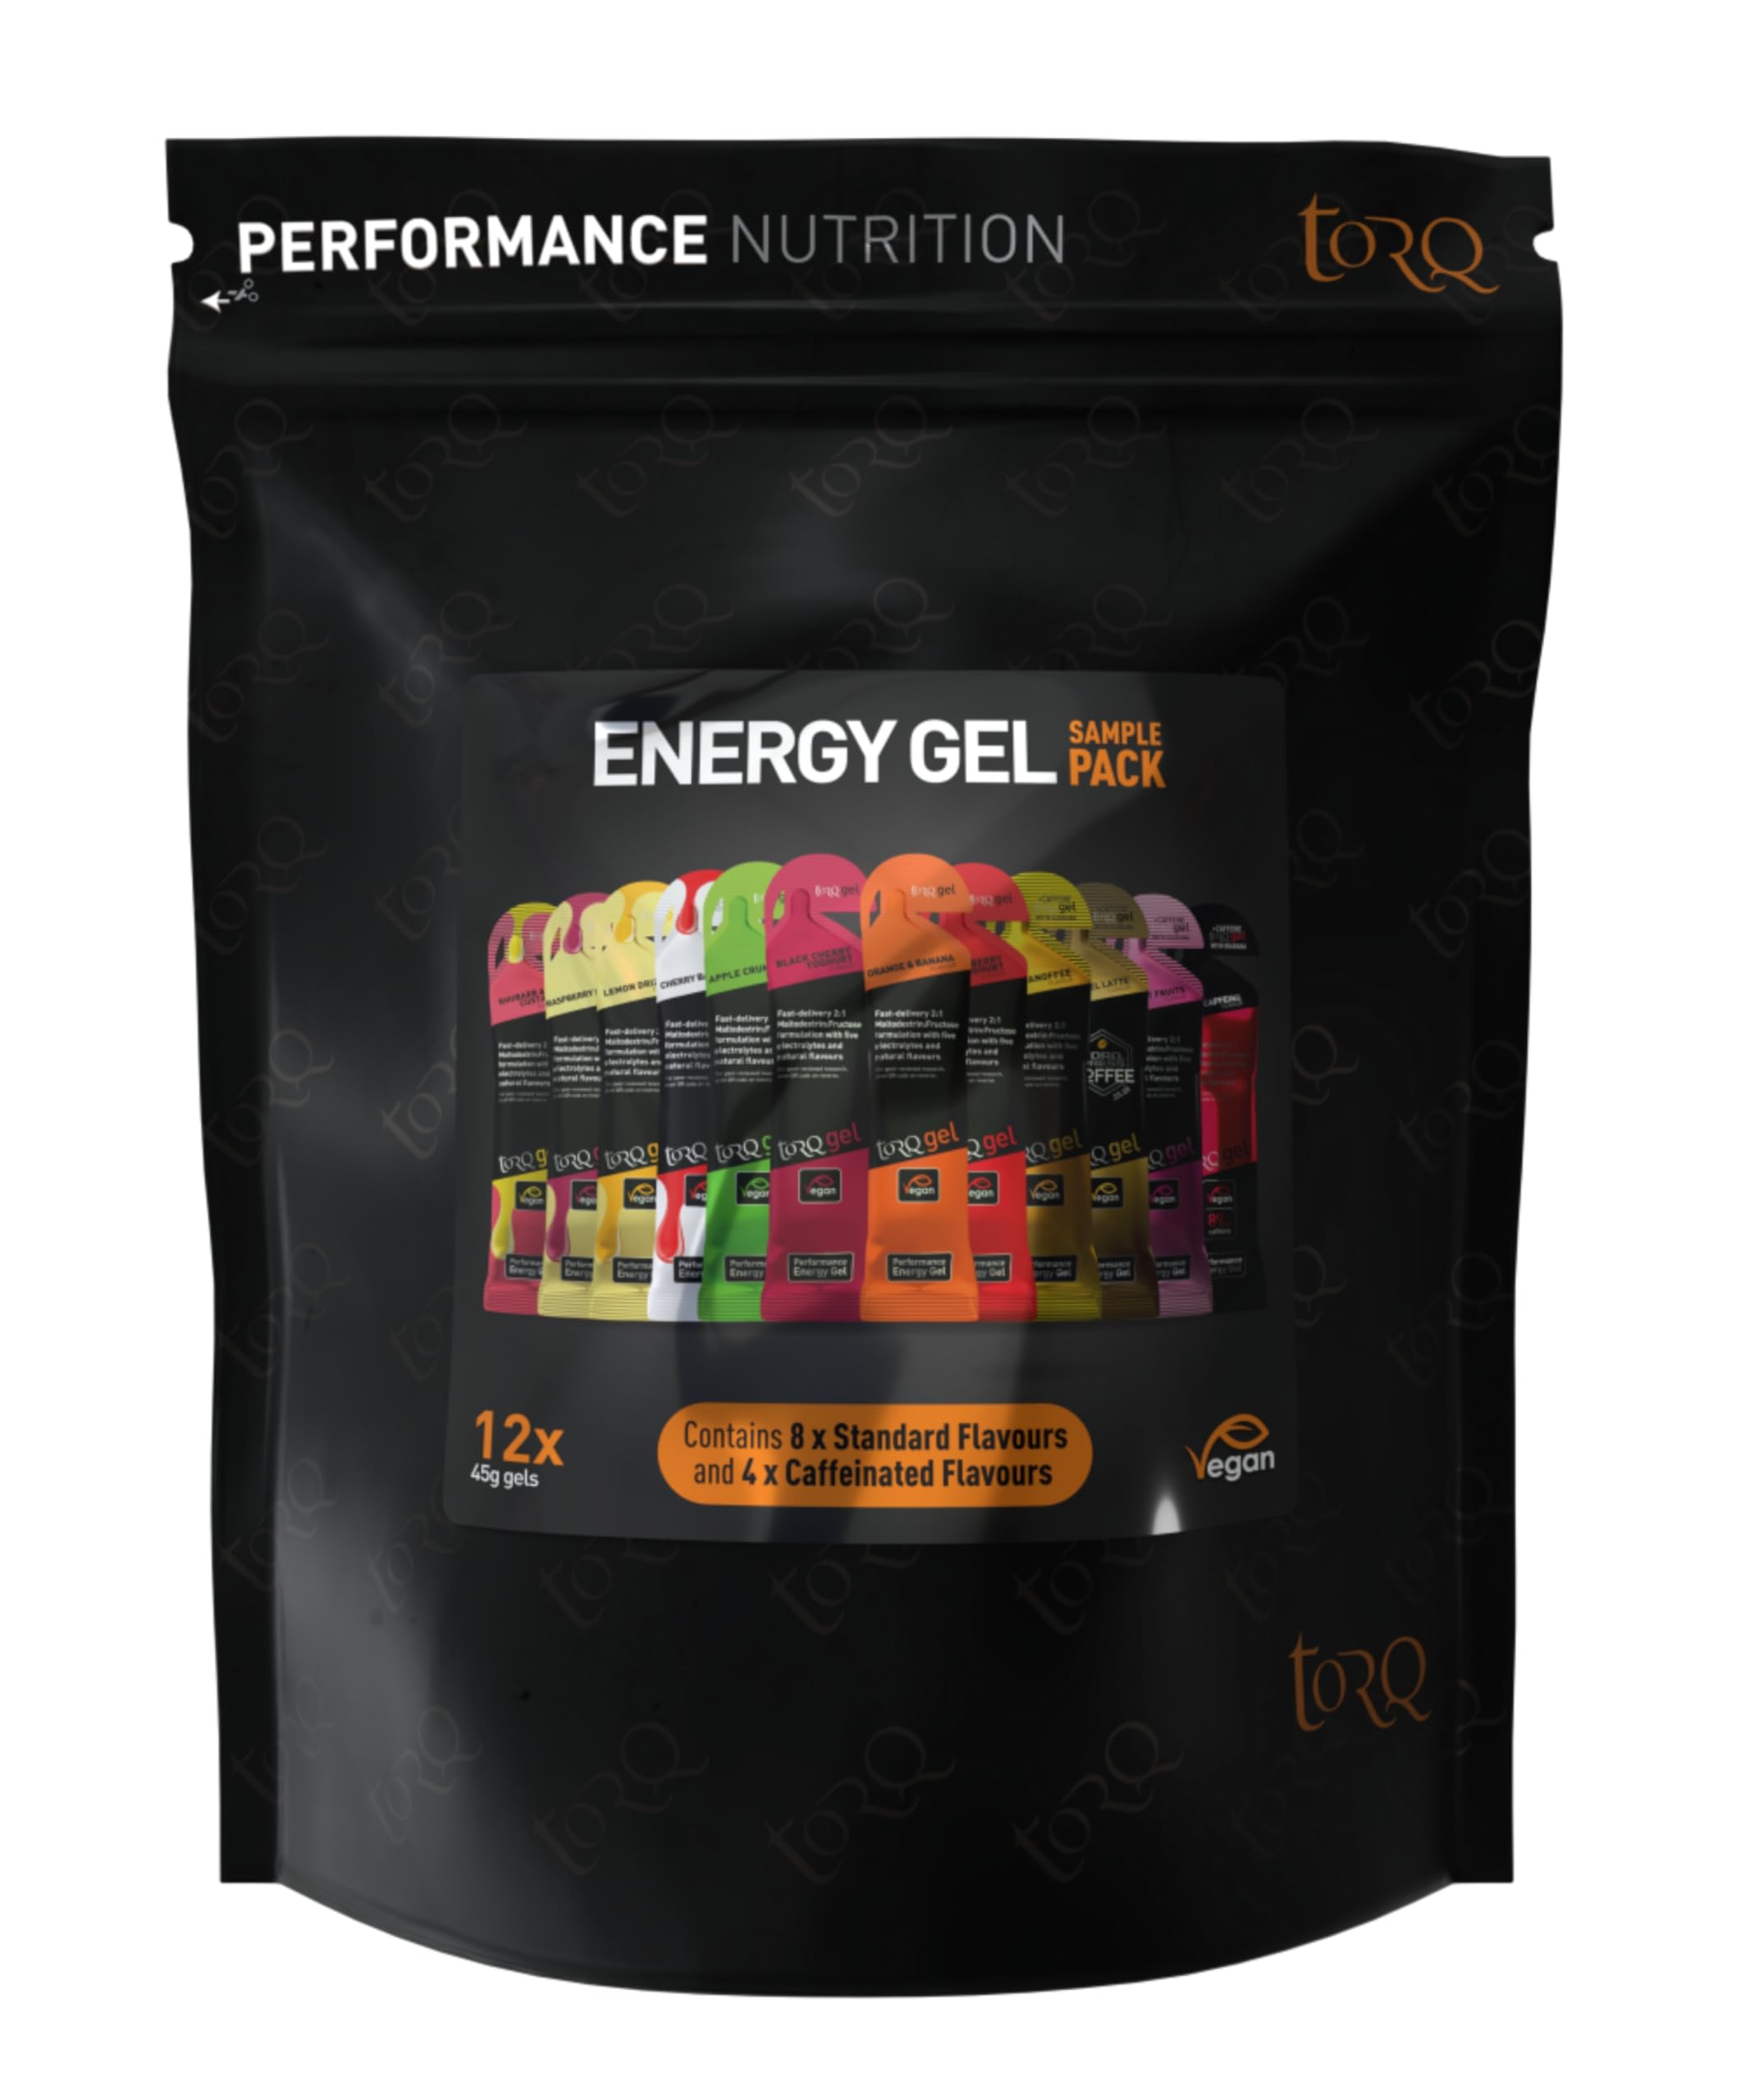 Torq Energy Gel Probepackung 12 Stück - Ultimative On The Go Quick Release Energy - 30g Kohlenhydrate - Laufen/Radfahren/Sportgele - Probepackung - Natürlich & Vegan